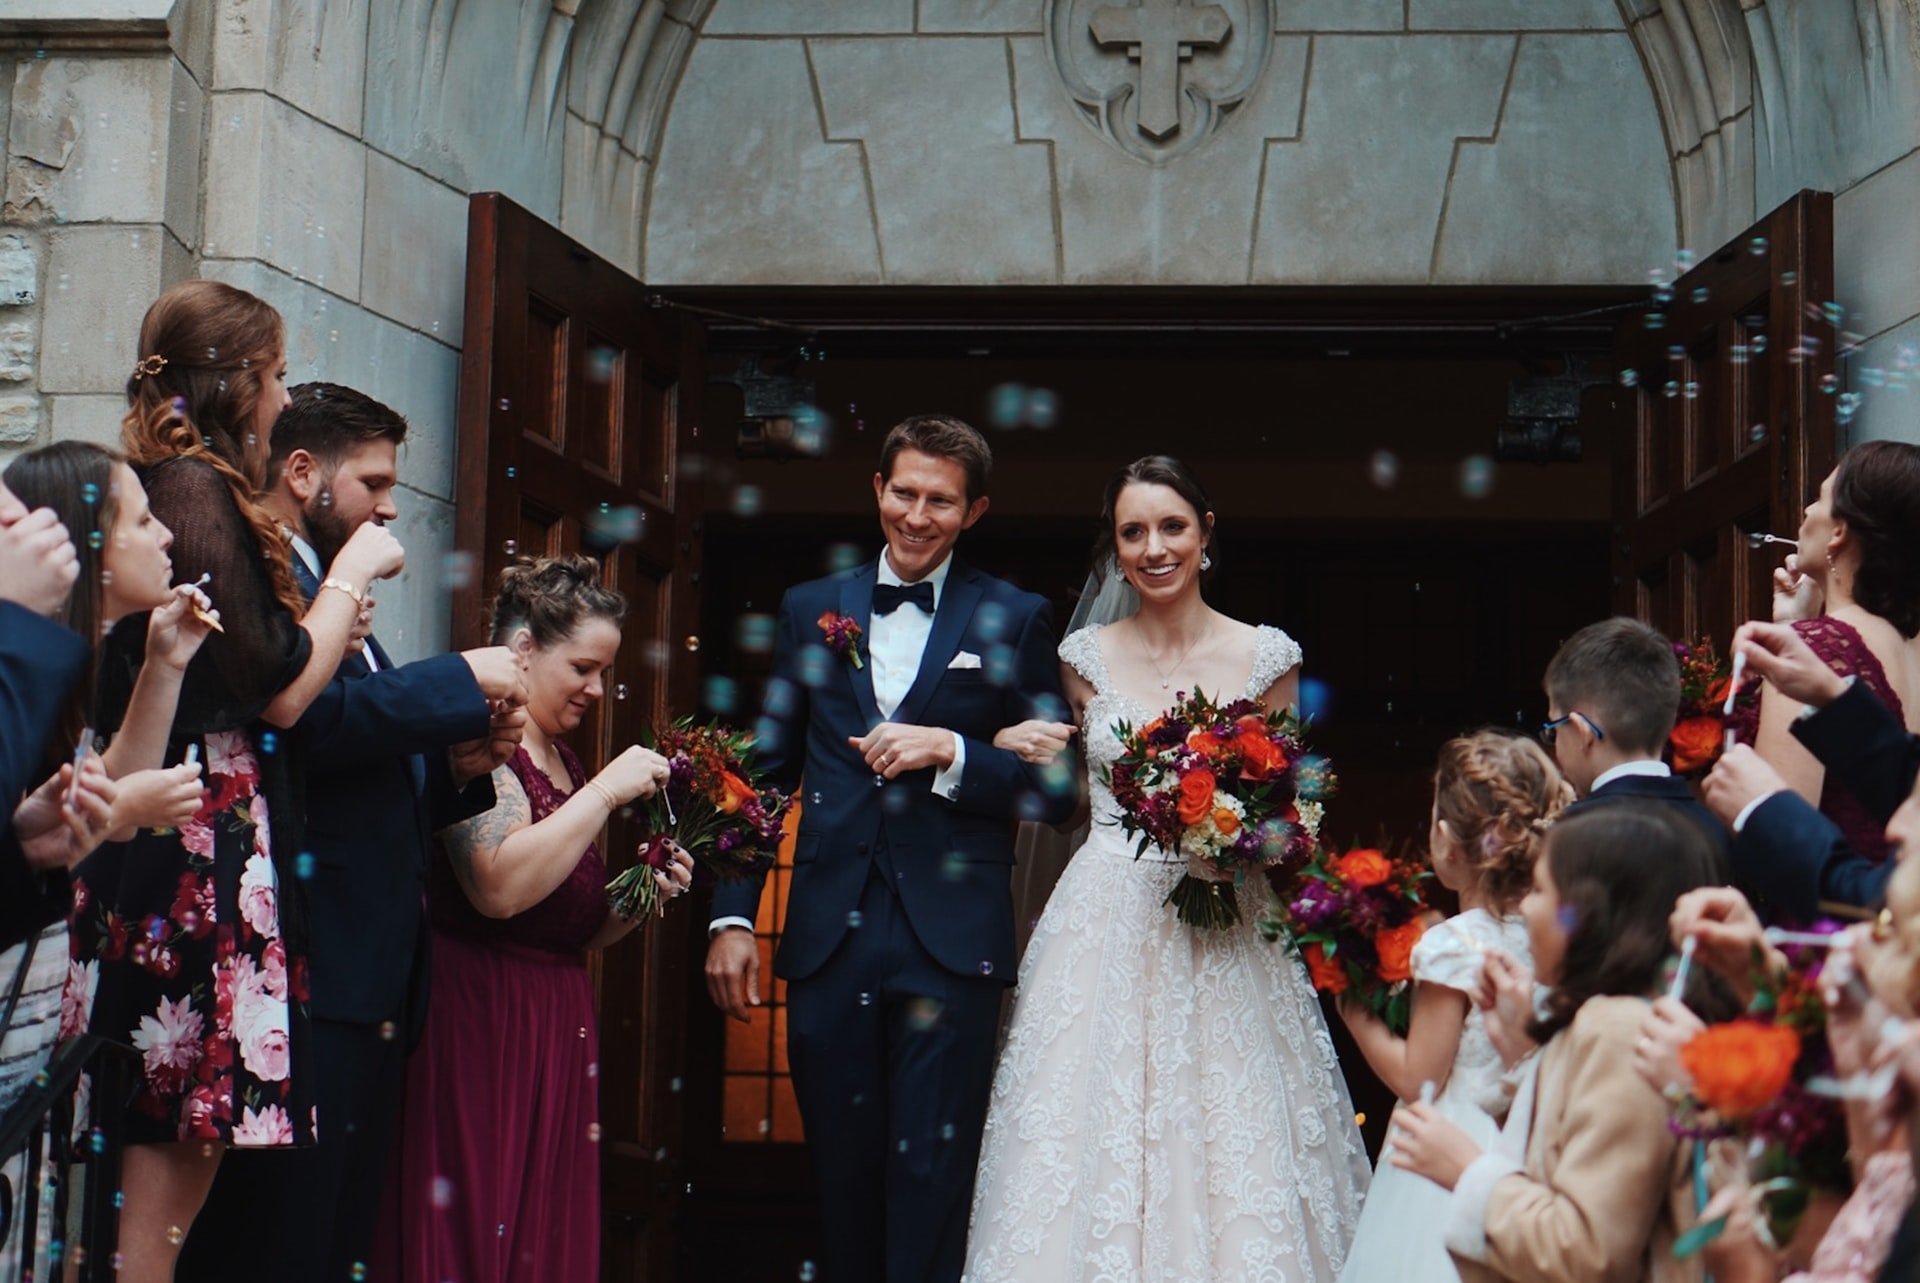 Bride and groom standing between the guests | Source: Unsplash